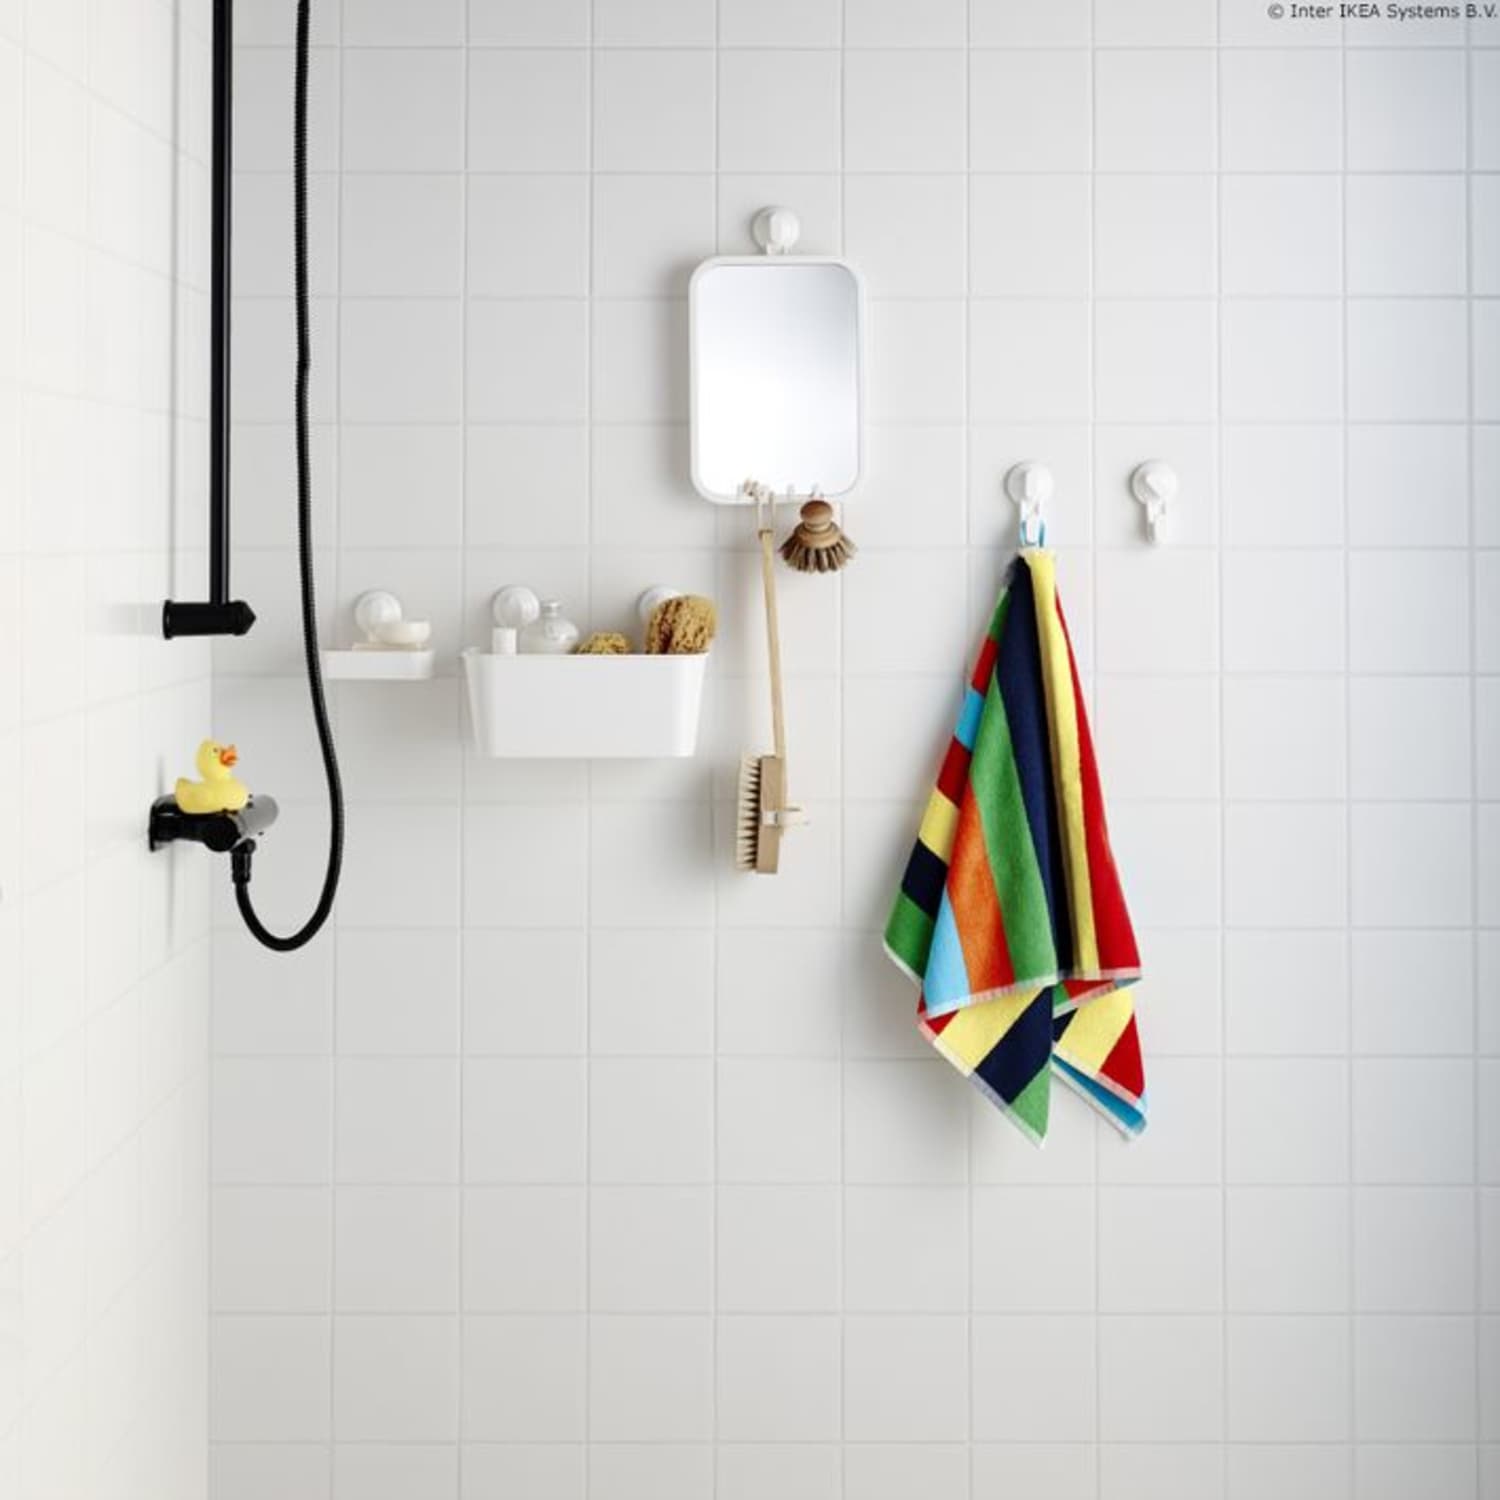 Bathroom Accessories & Organizers - IKEA